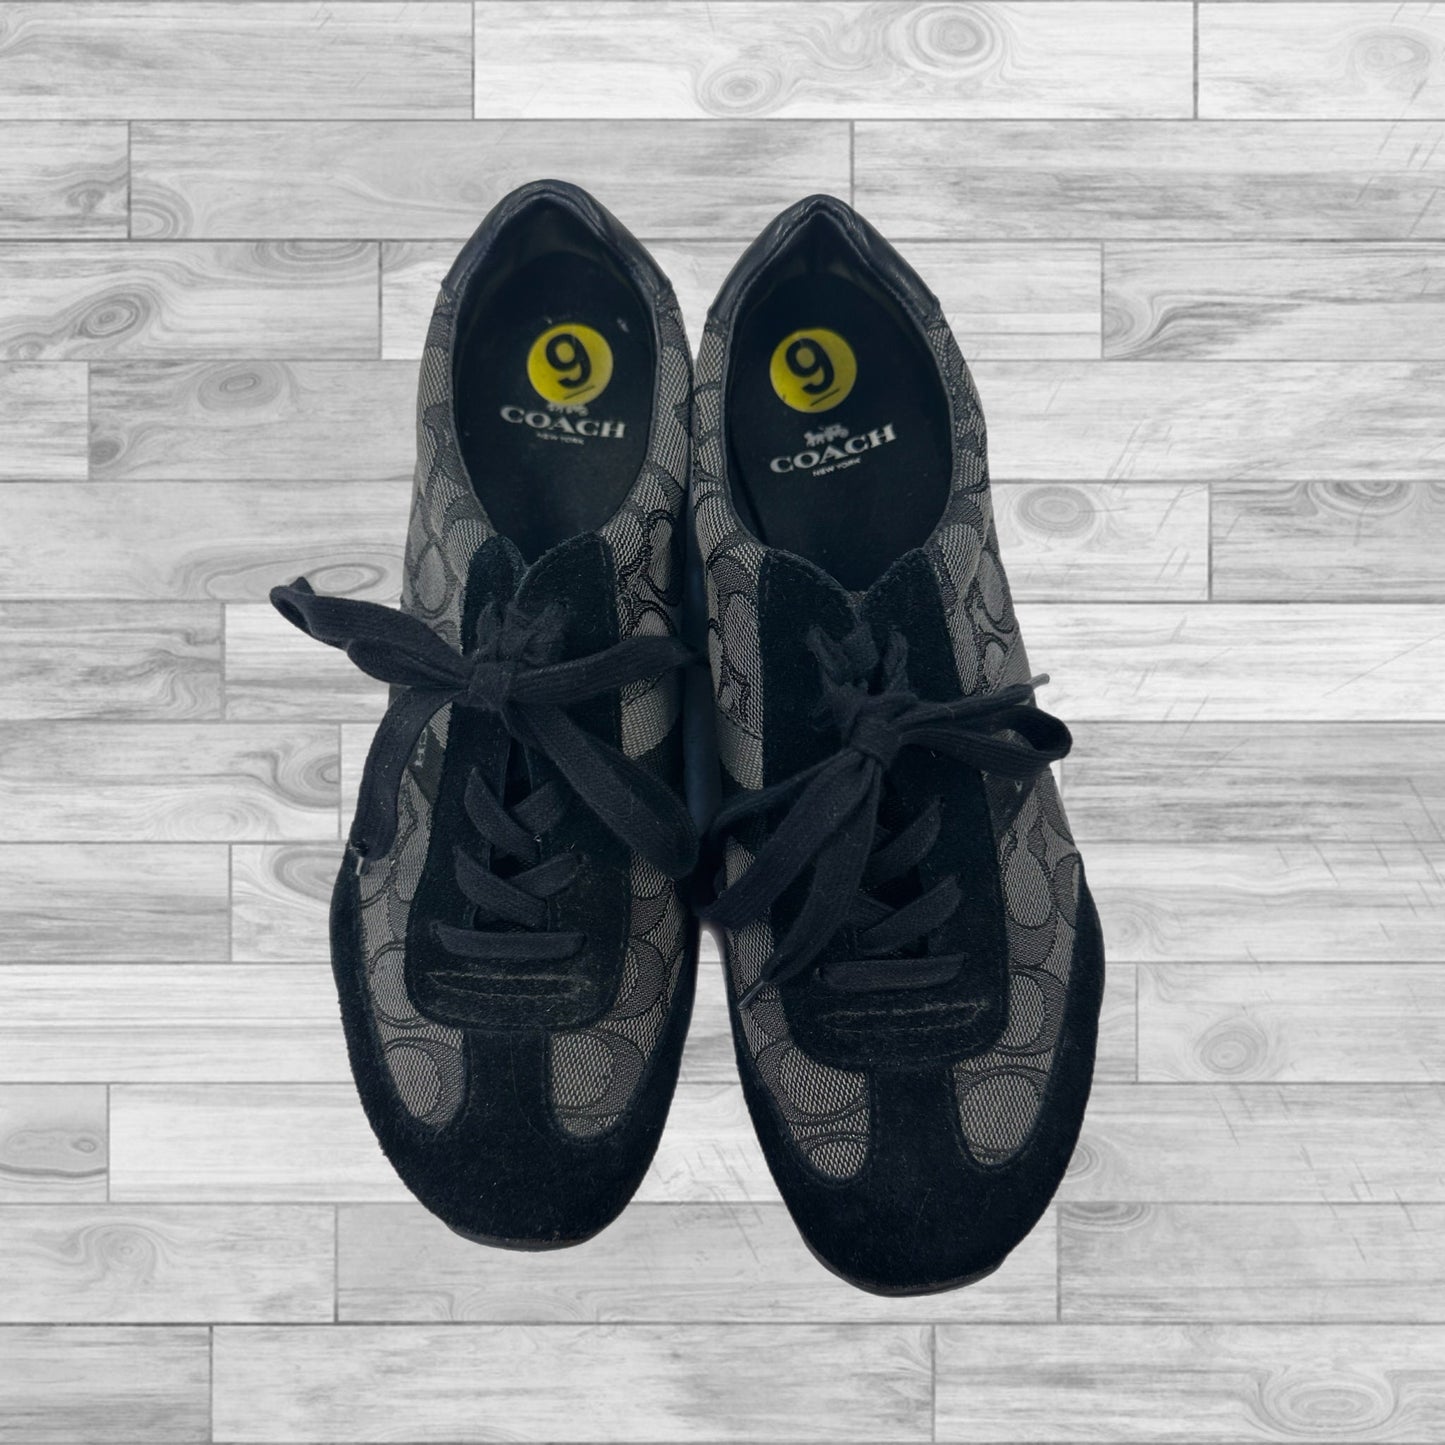 Black Shoes Sneakers Coach, Size 9